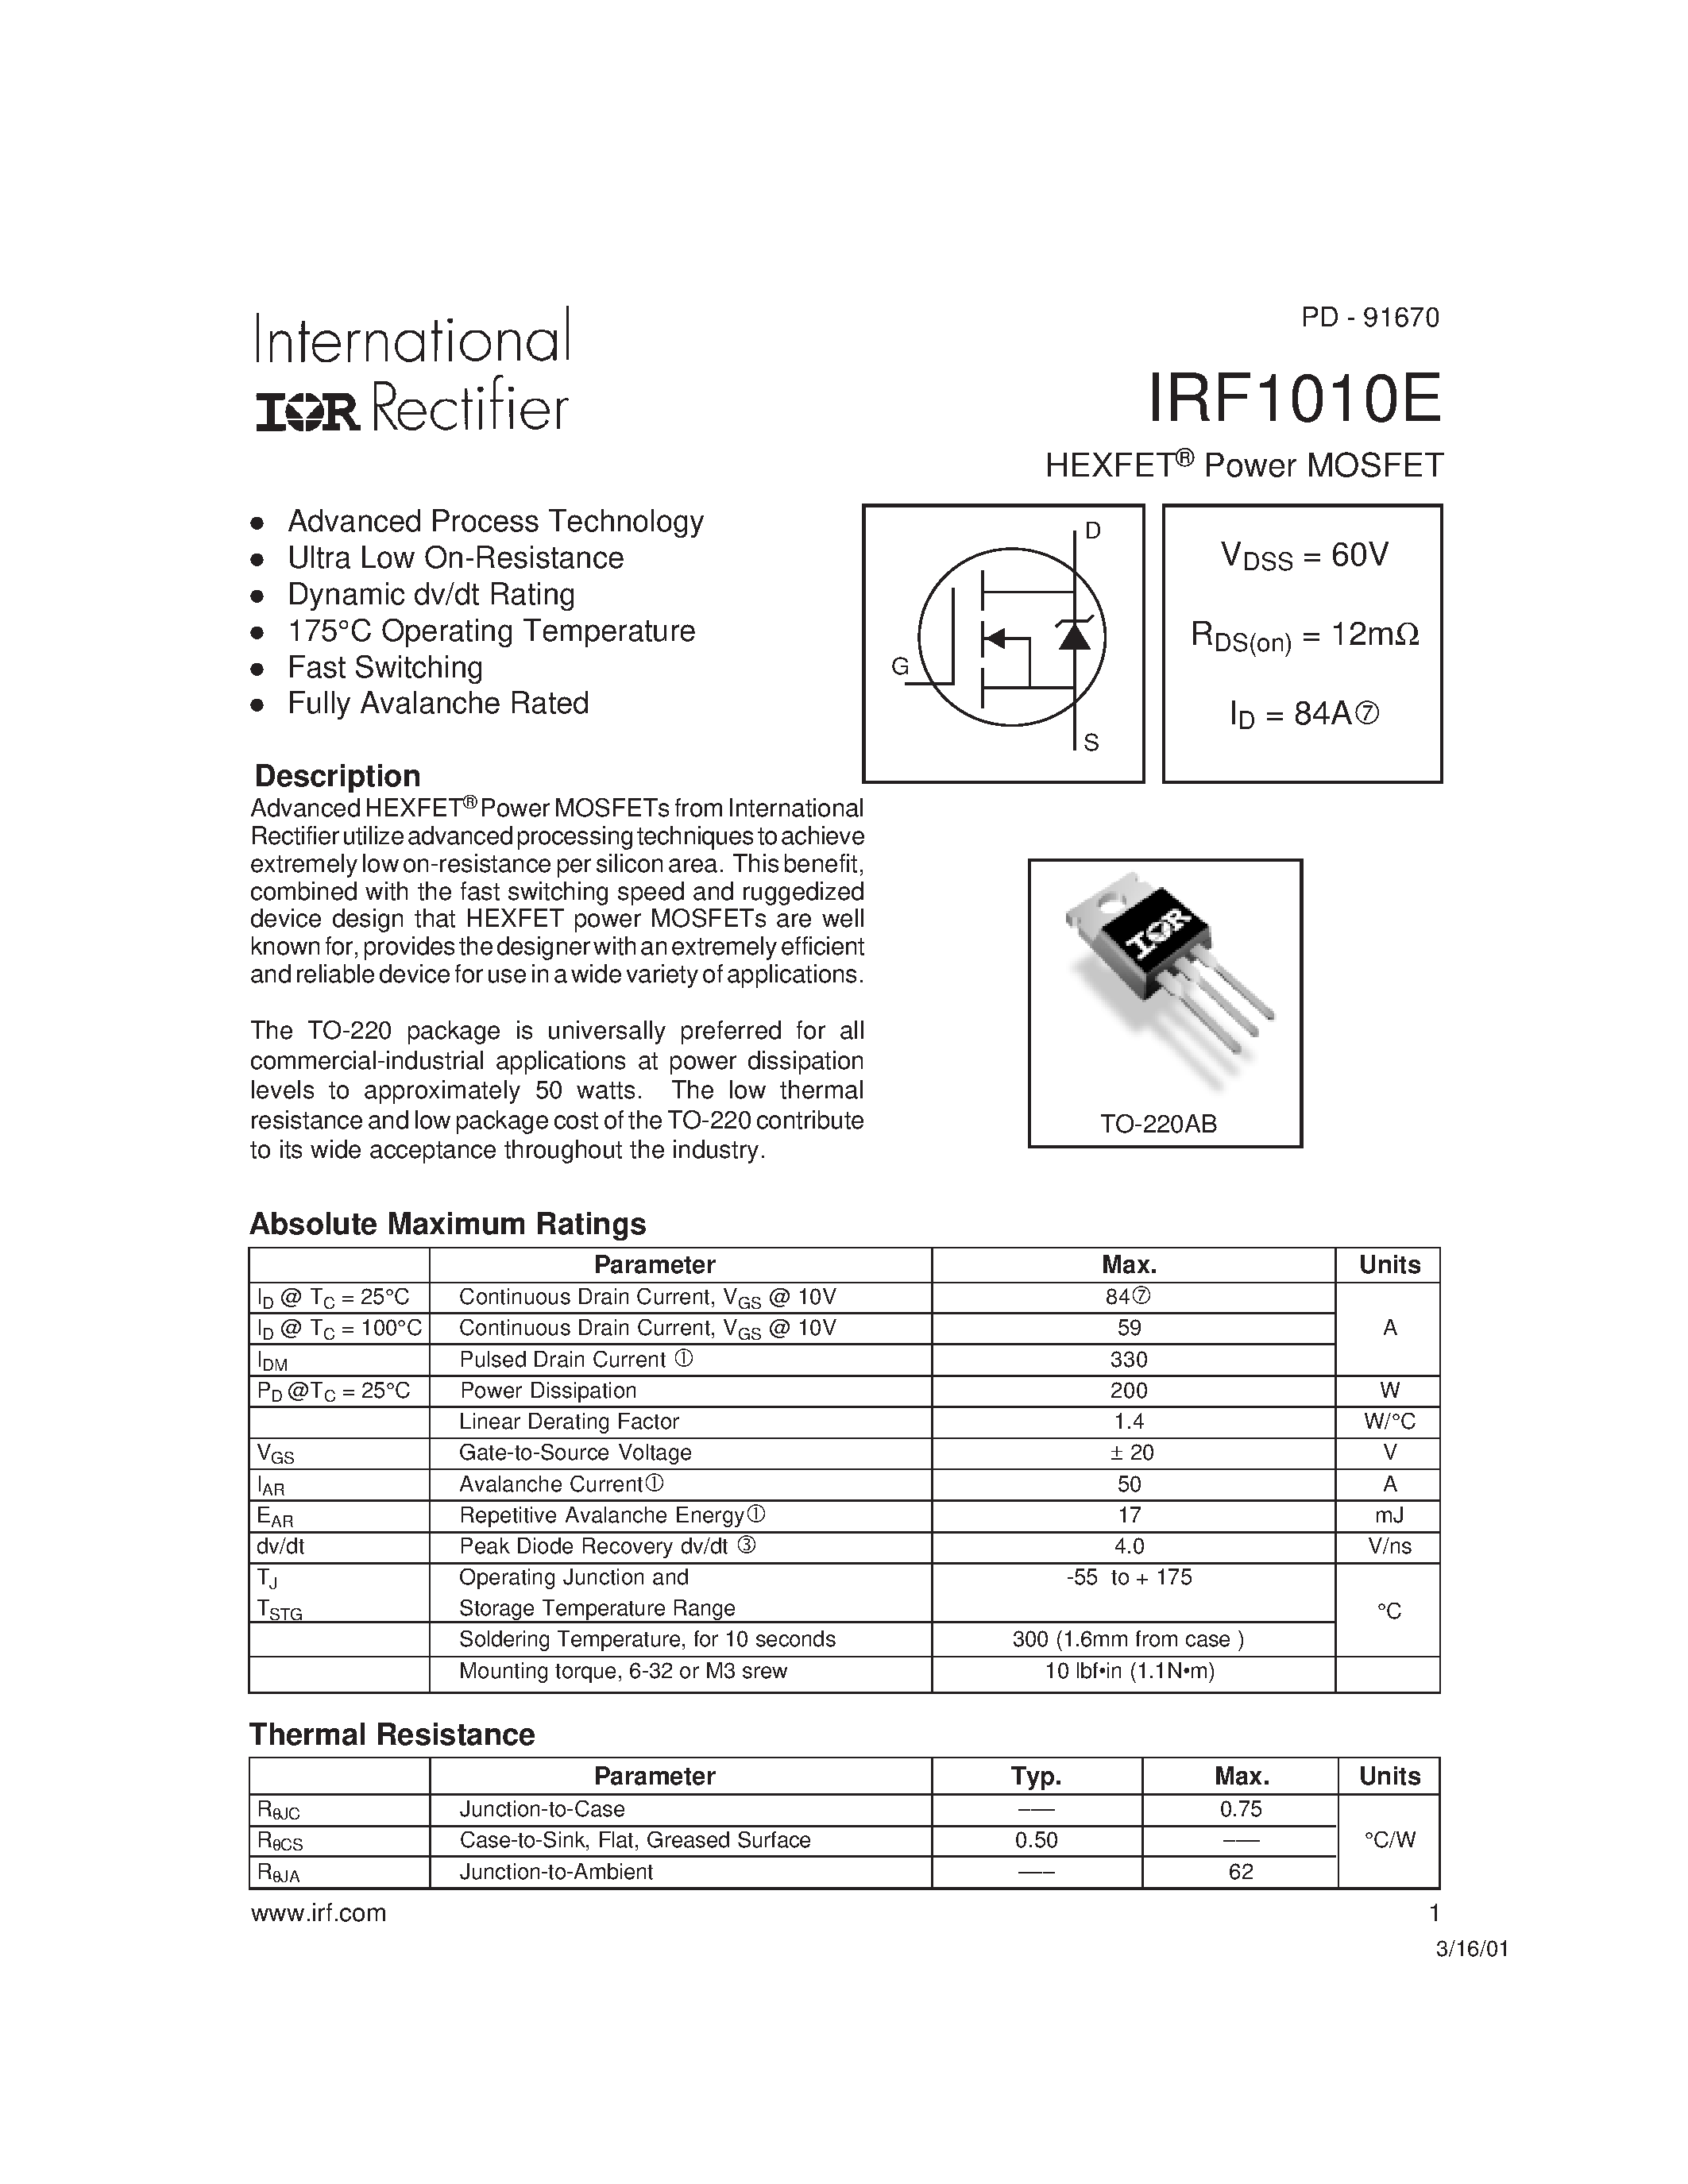 Даташит IRF1010E - Power MOSFET(Vdss=60V/Rds(on)=12mohm/Id=84A страница 1